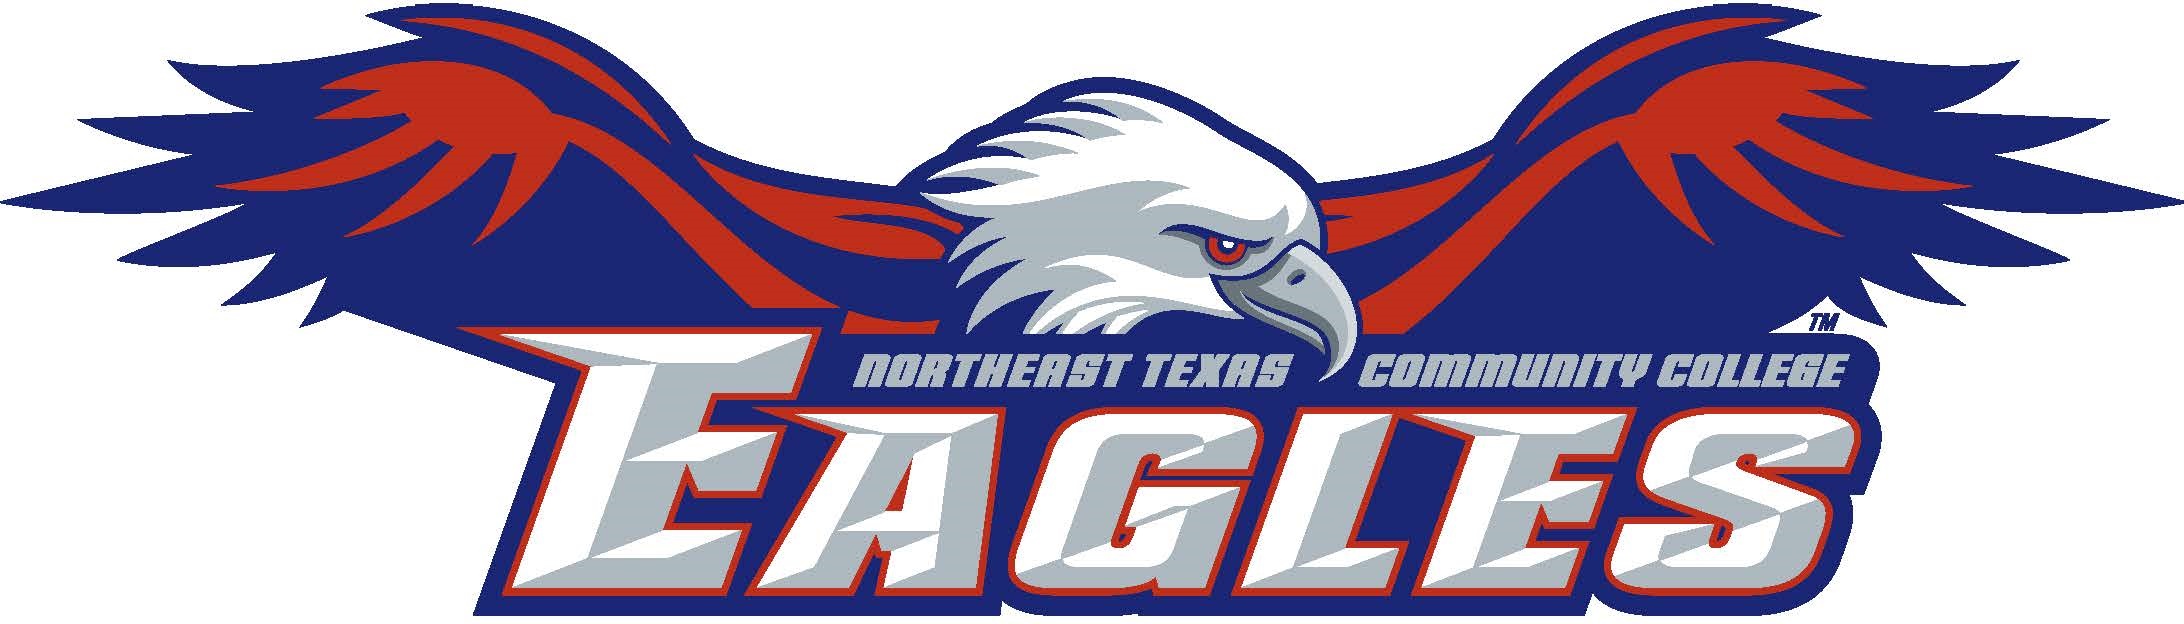 eagles softball logo